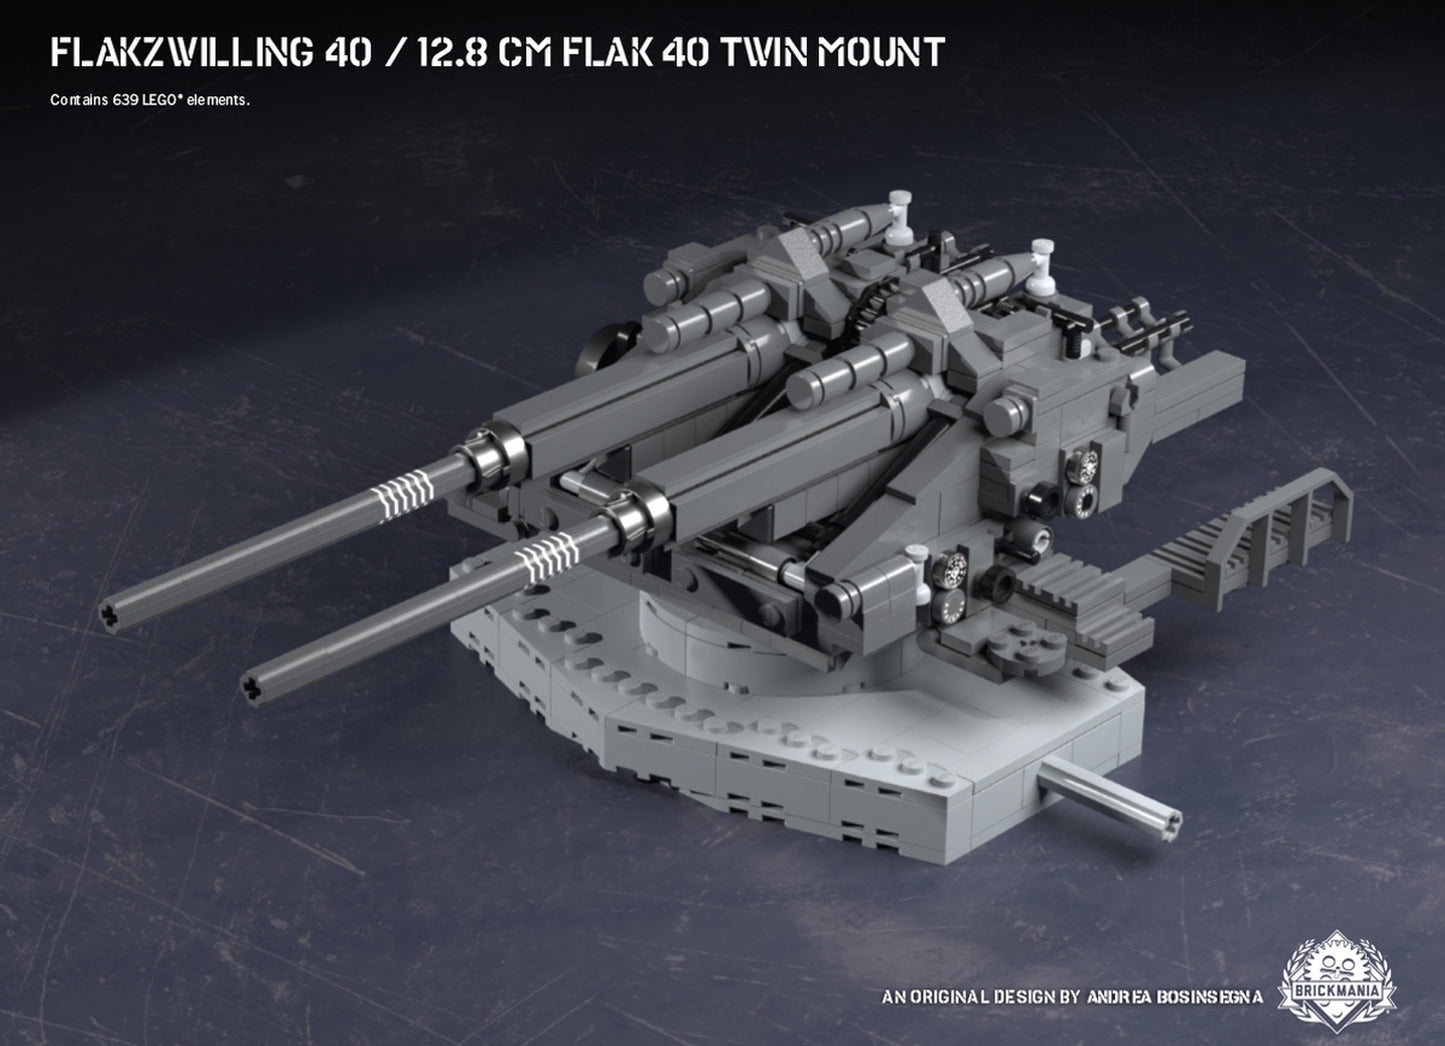 Flakzwilling 40 – 12.8 cm FlaK 40 Twin Mount